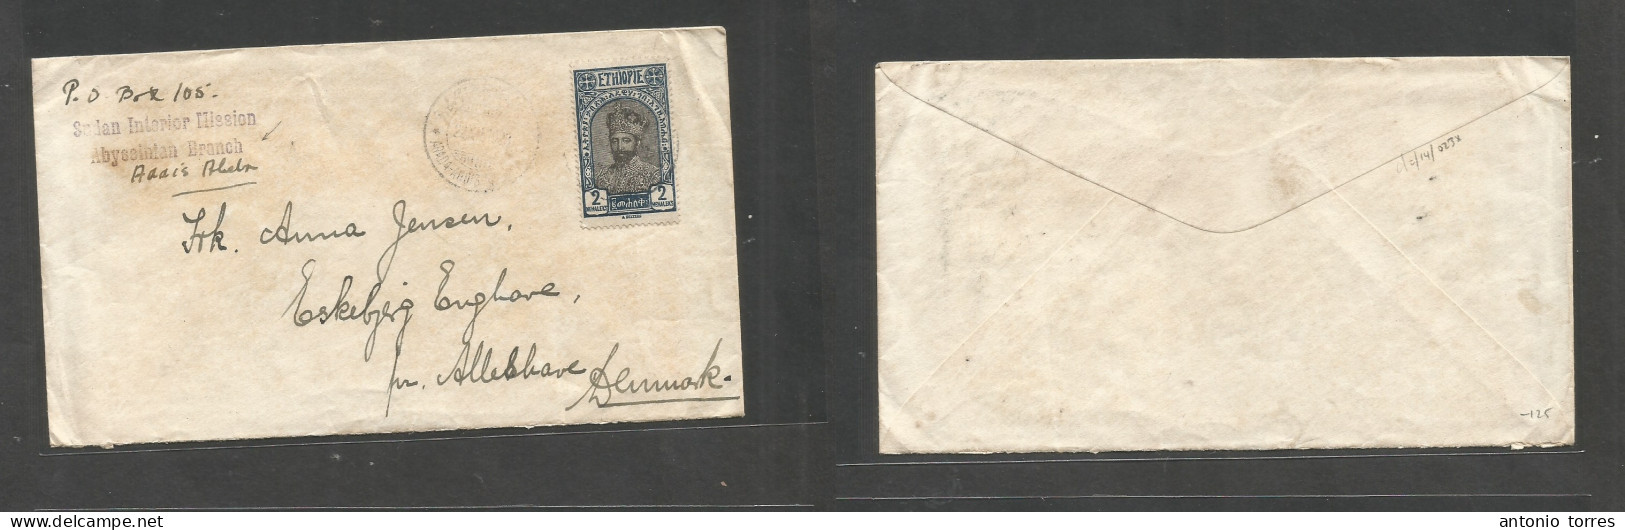 Ethiopia. 1928 (22 Dec) Sudan Mission. Abissinian Branch. Abada, Addis Abeba - Denmark, Eskebjeg. 2m Single Fkd Envelope - Ethiopie